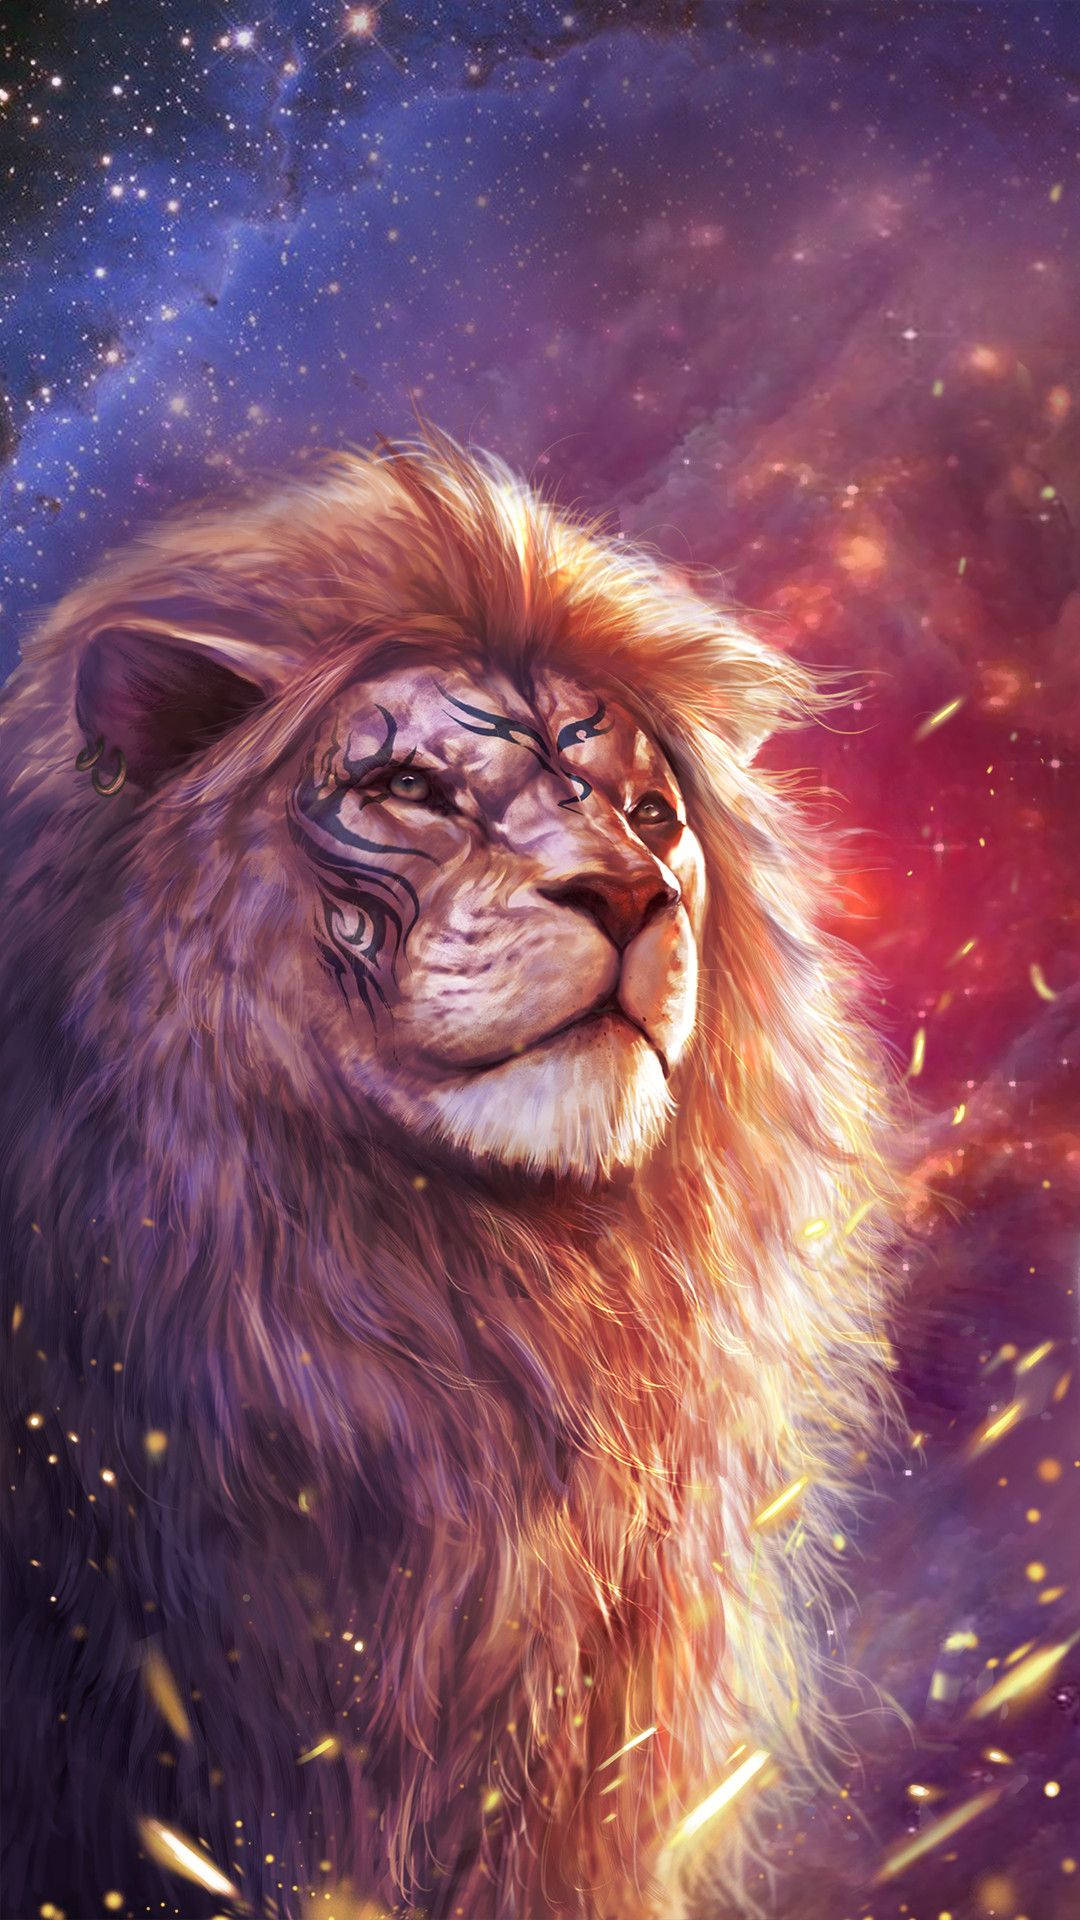 Cool Lion Digital Art